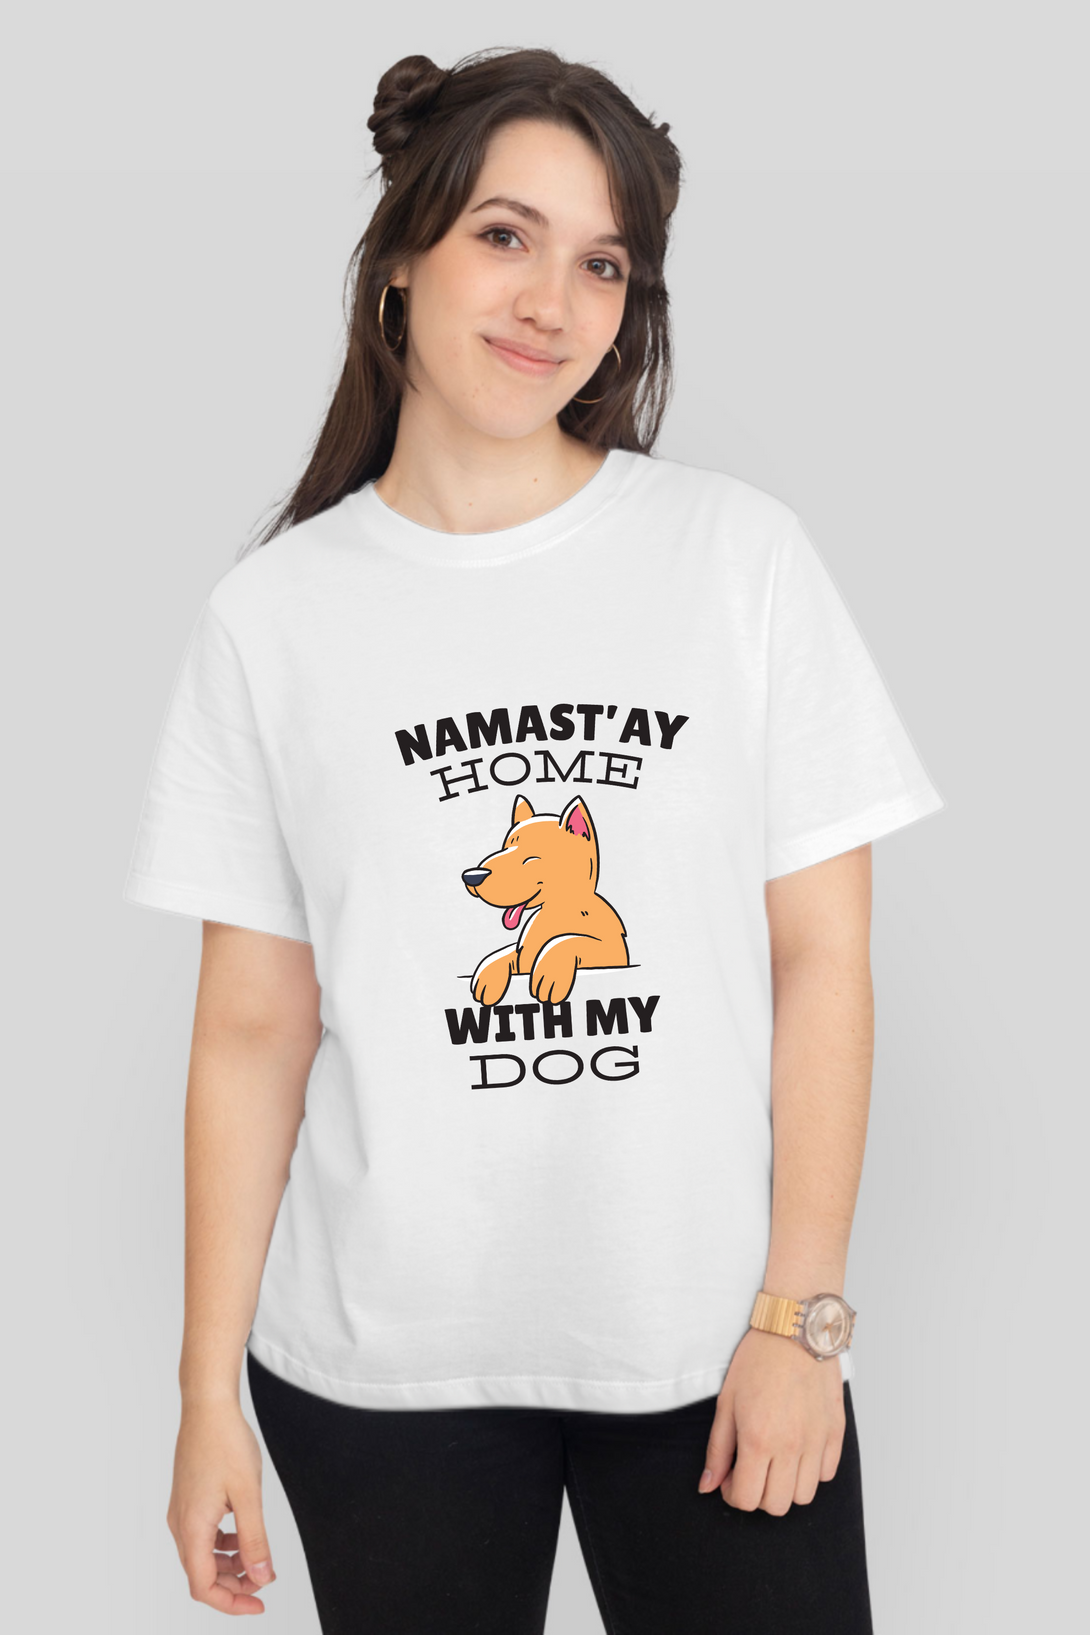 Namastay Home Dog Printed T-Shirt For Women - WowWaves - 7